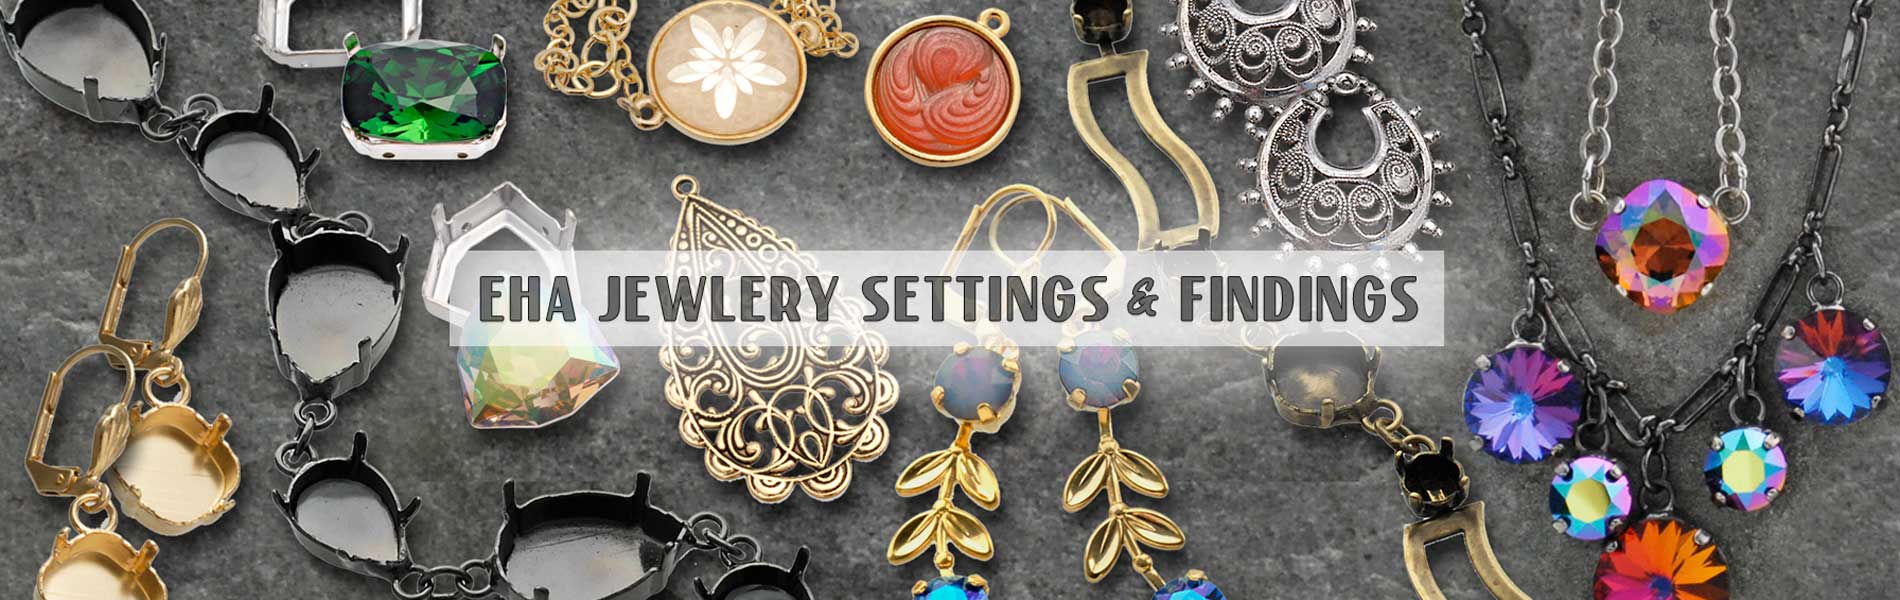 eha-jewelry-settings-filigree-brilliance-swarovski